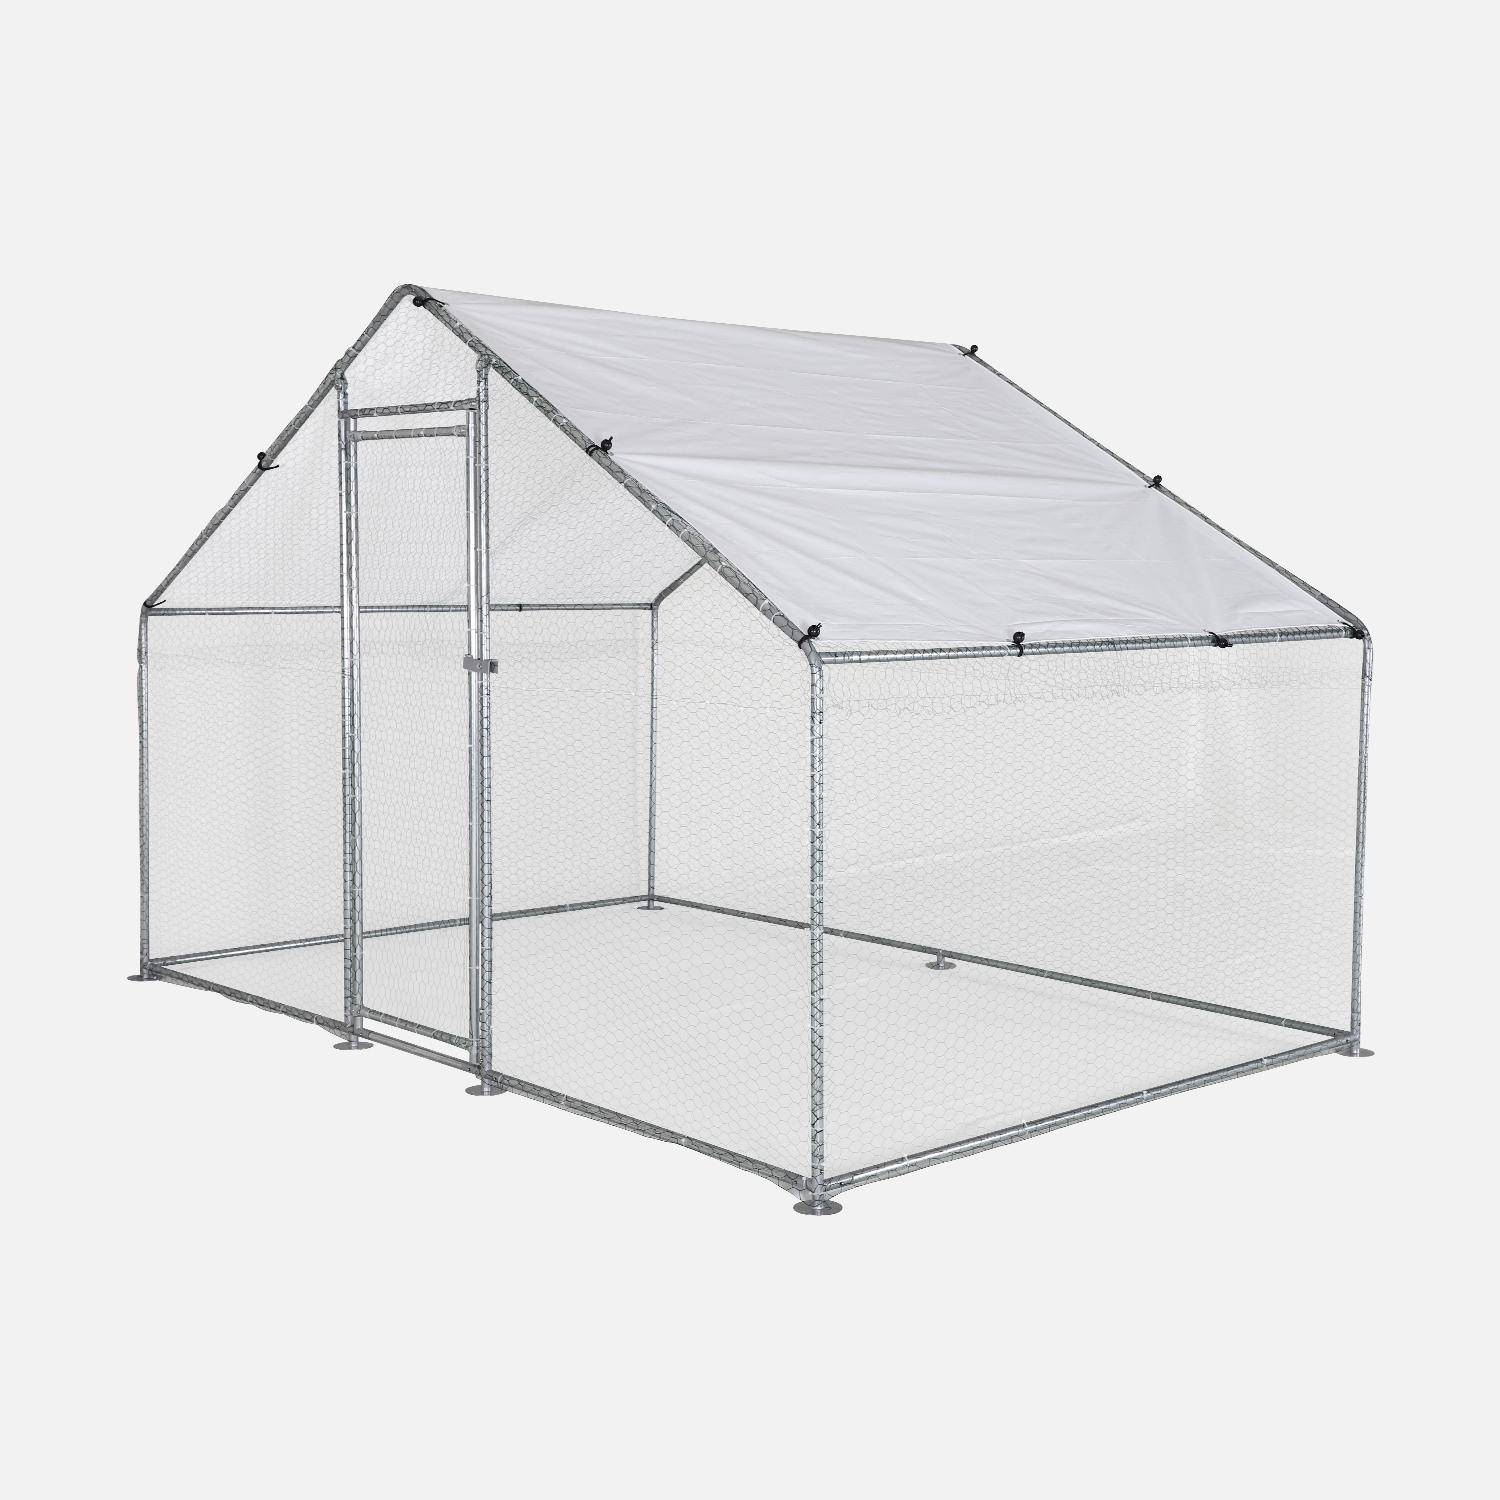 Kippenverblijf 6m² - Babette - gegalvaniseerd staal, waterdicht en UV-bestendig dak, deur met klink,sweeek,Photo1